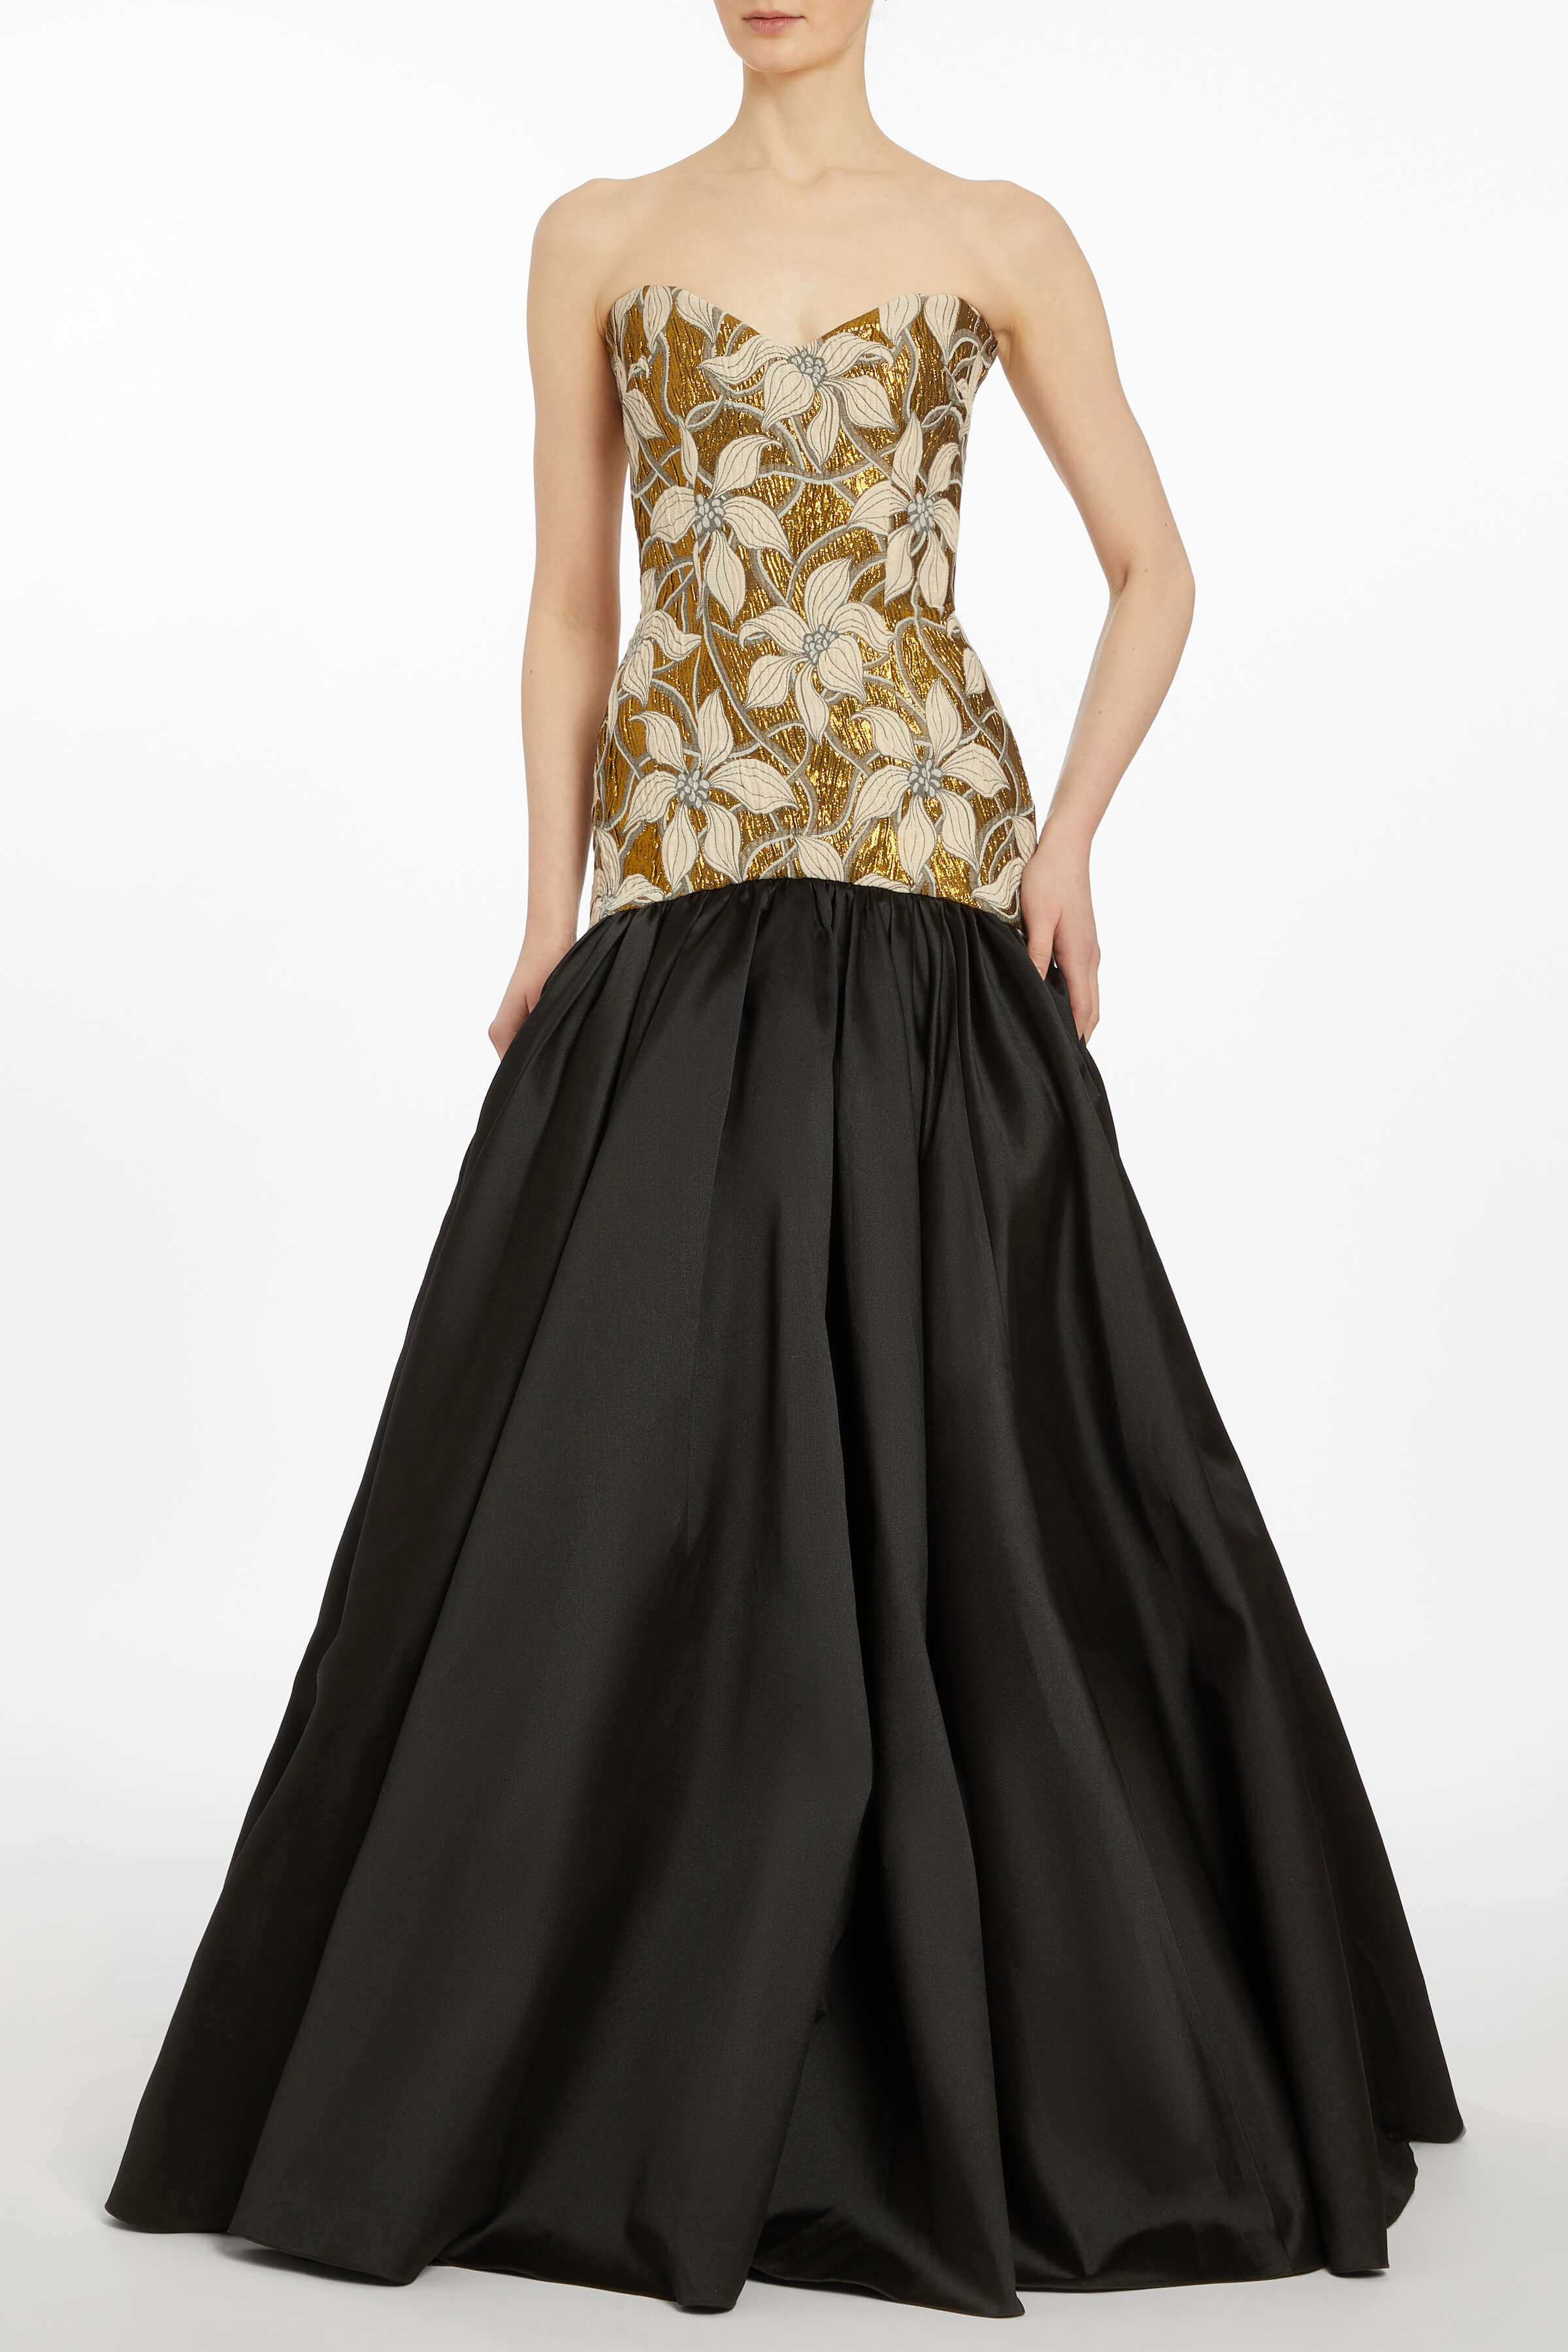 Gwendolyn Gold Floral Brocade Gown